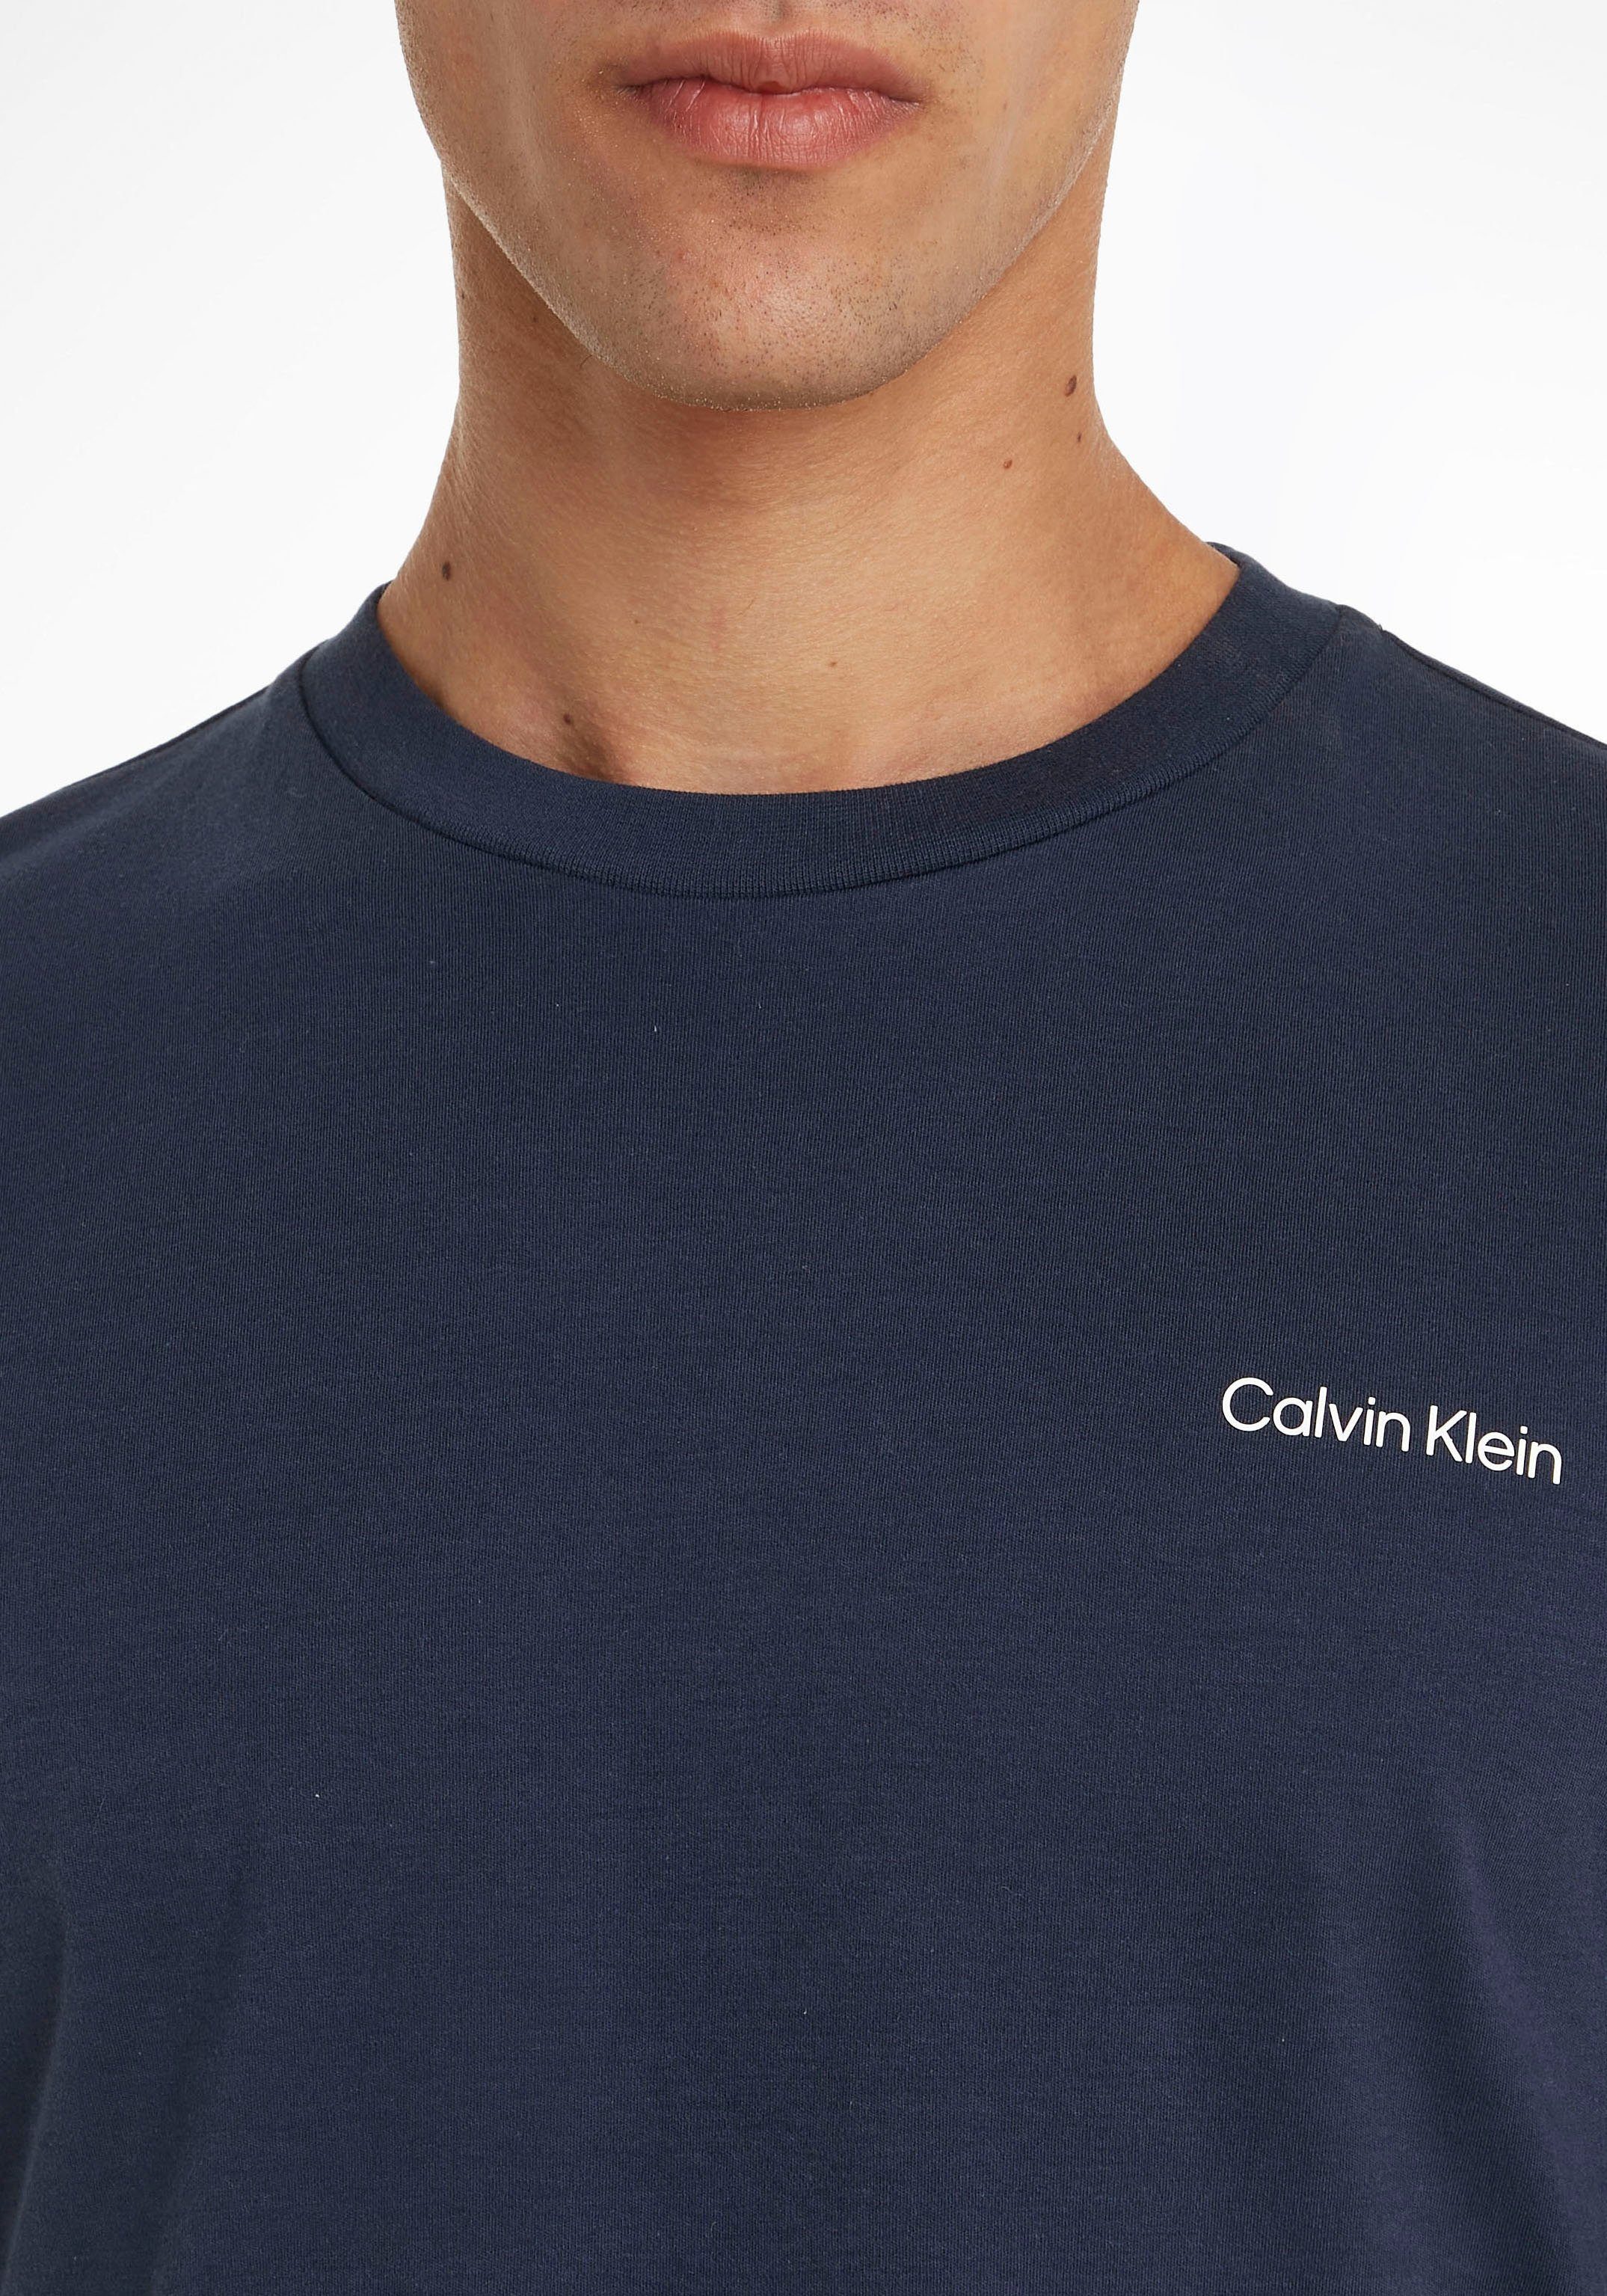 Logo aus dickem Winterjersey Micro Klein T-Shirt Calvin navy